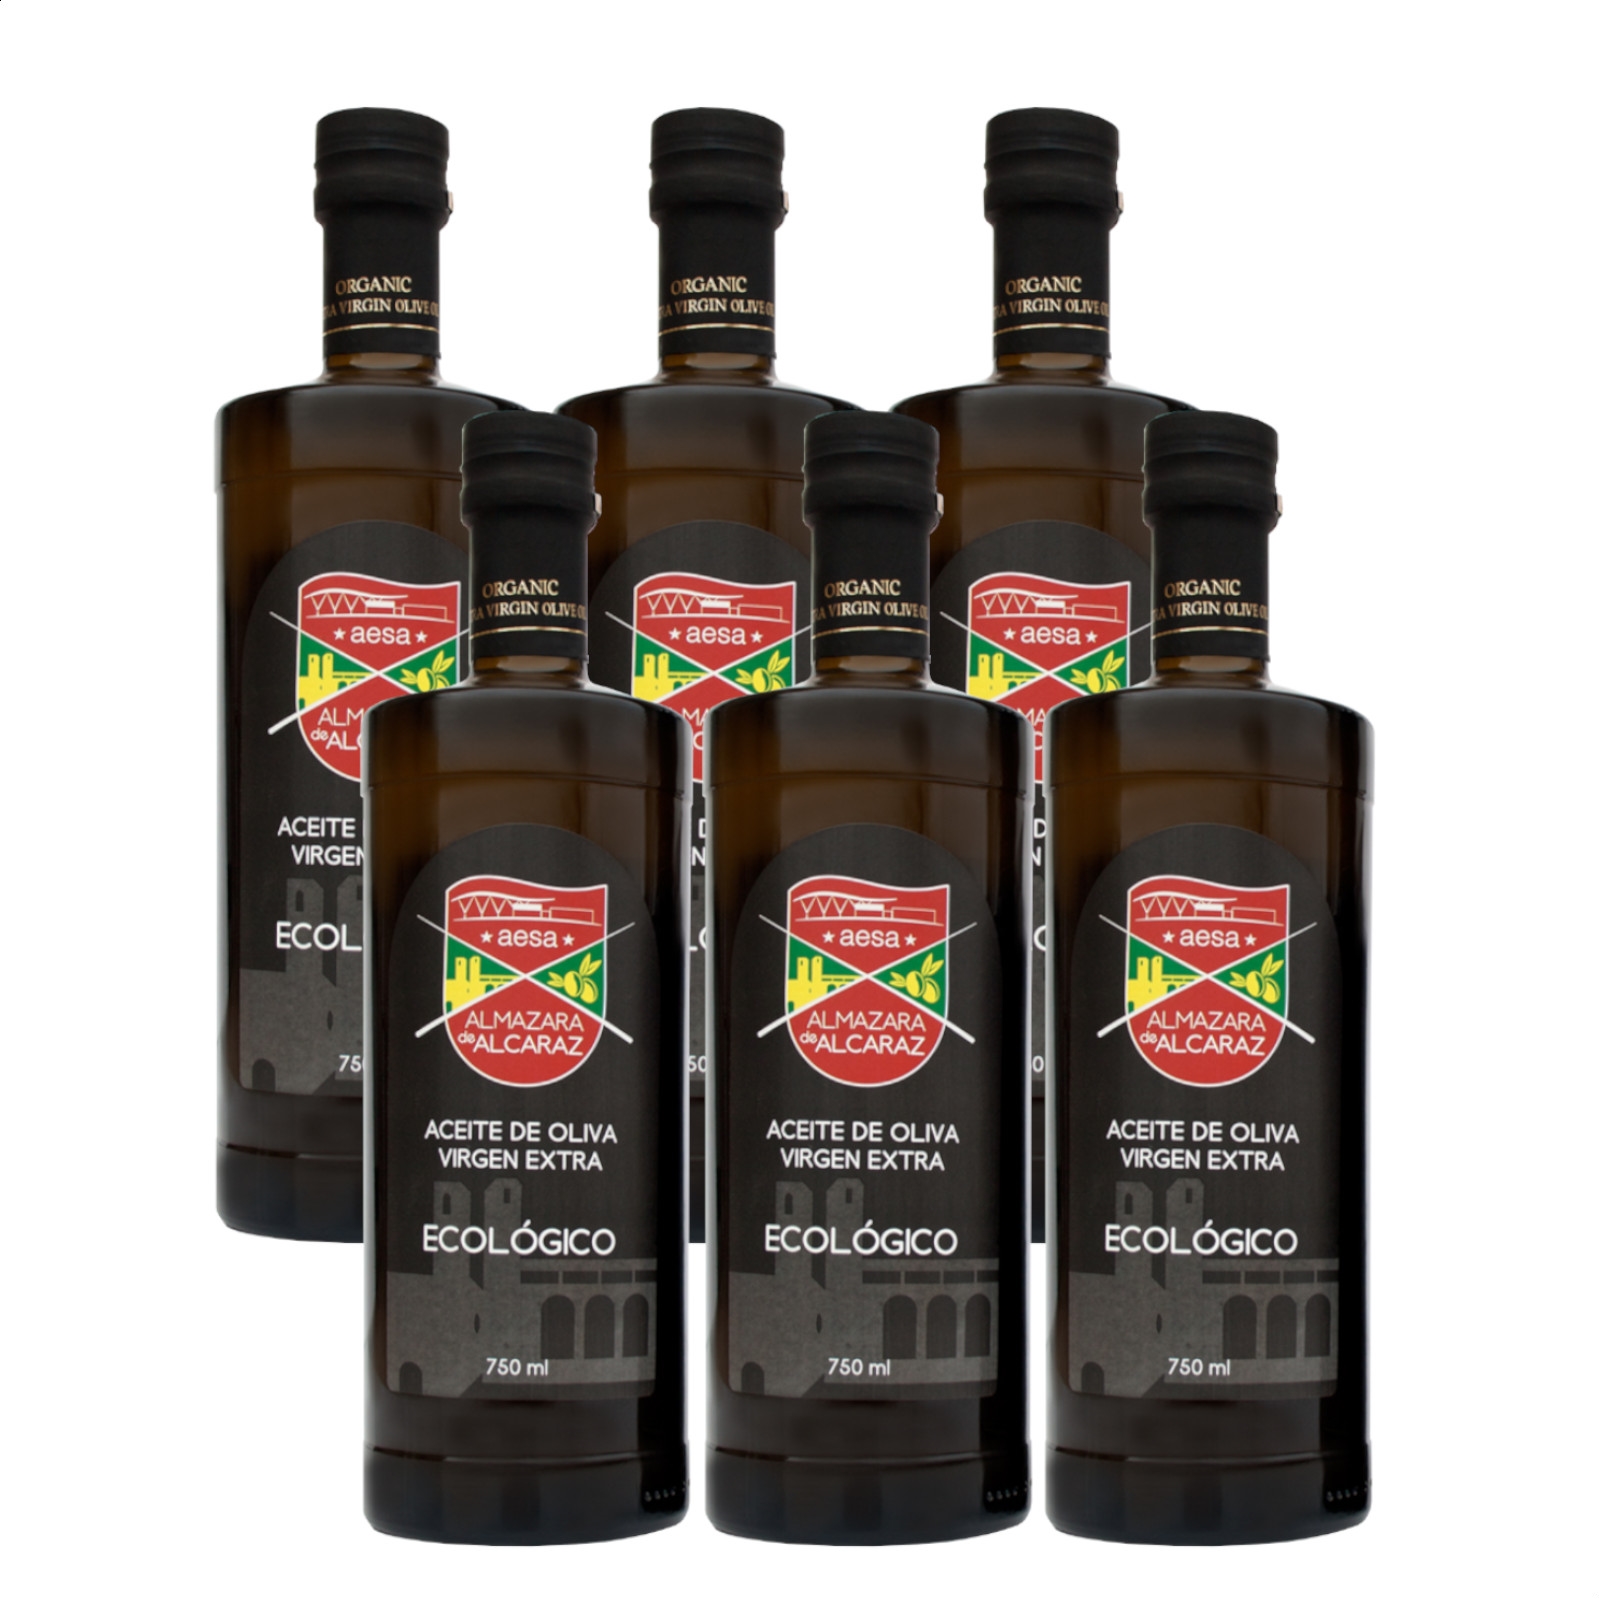 Aceite de oliva virgen extra 1 litro – Almazara Norte